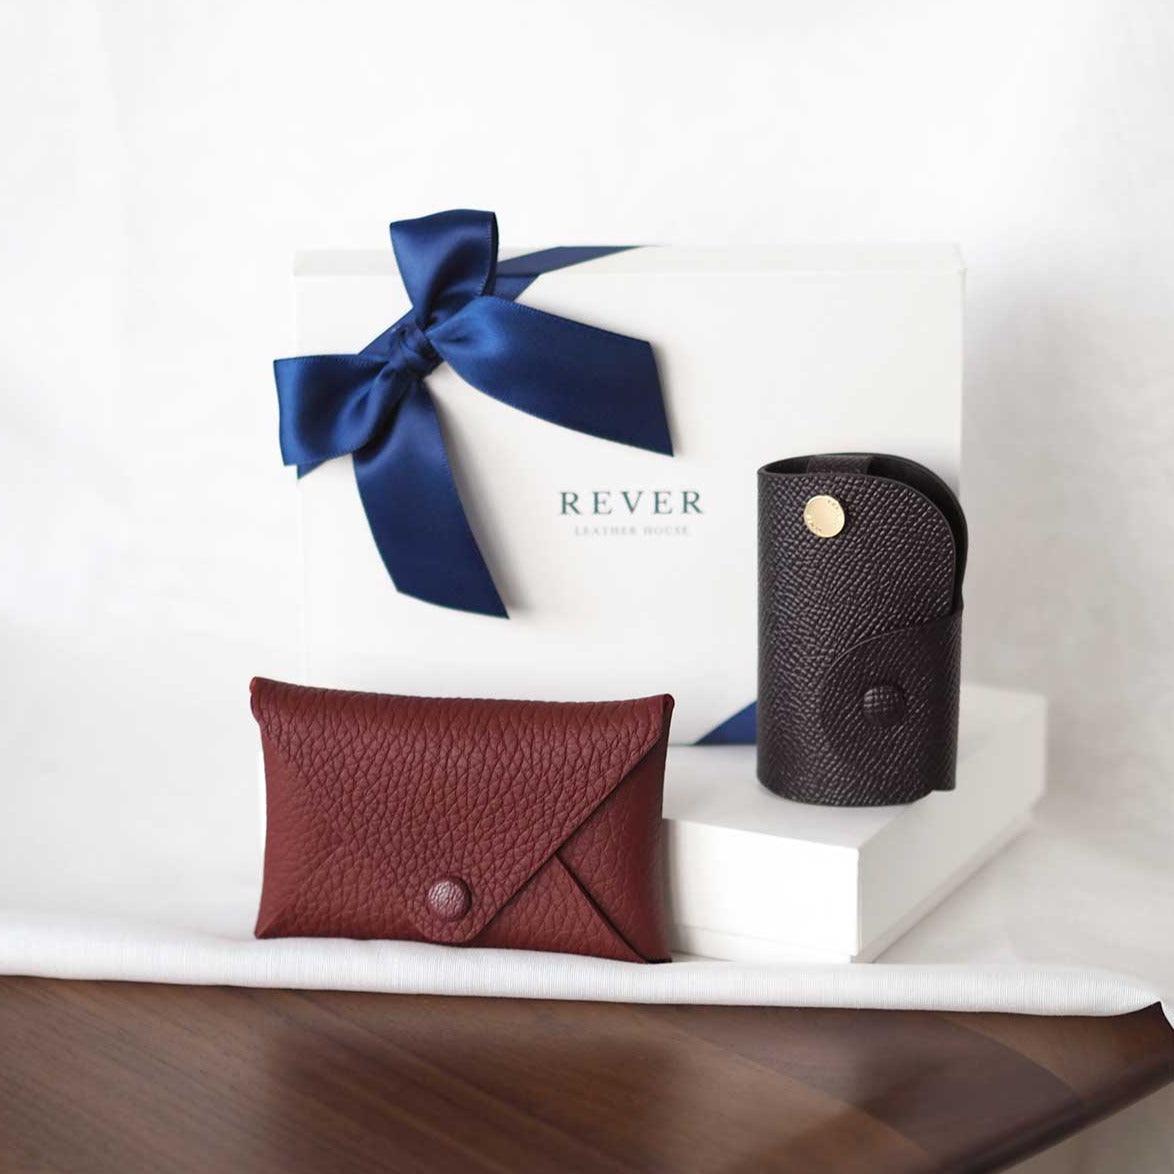 Card Holder & Key Holder Set - Rever Leather Goods